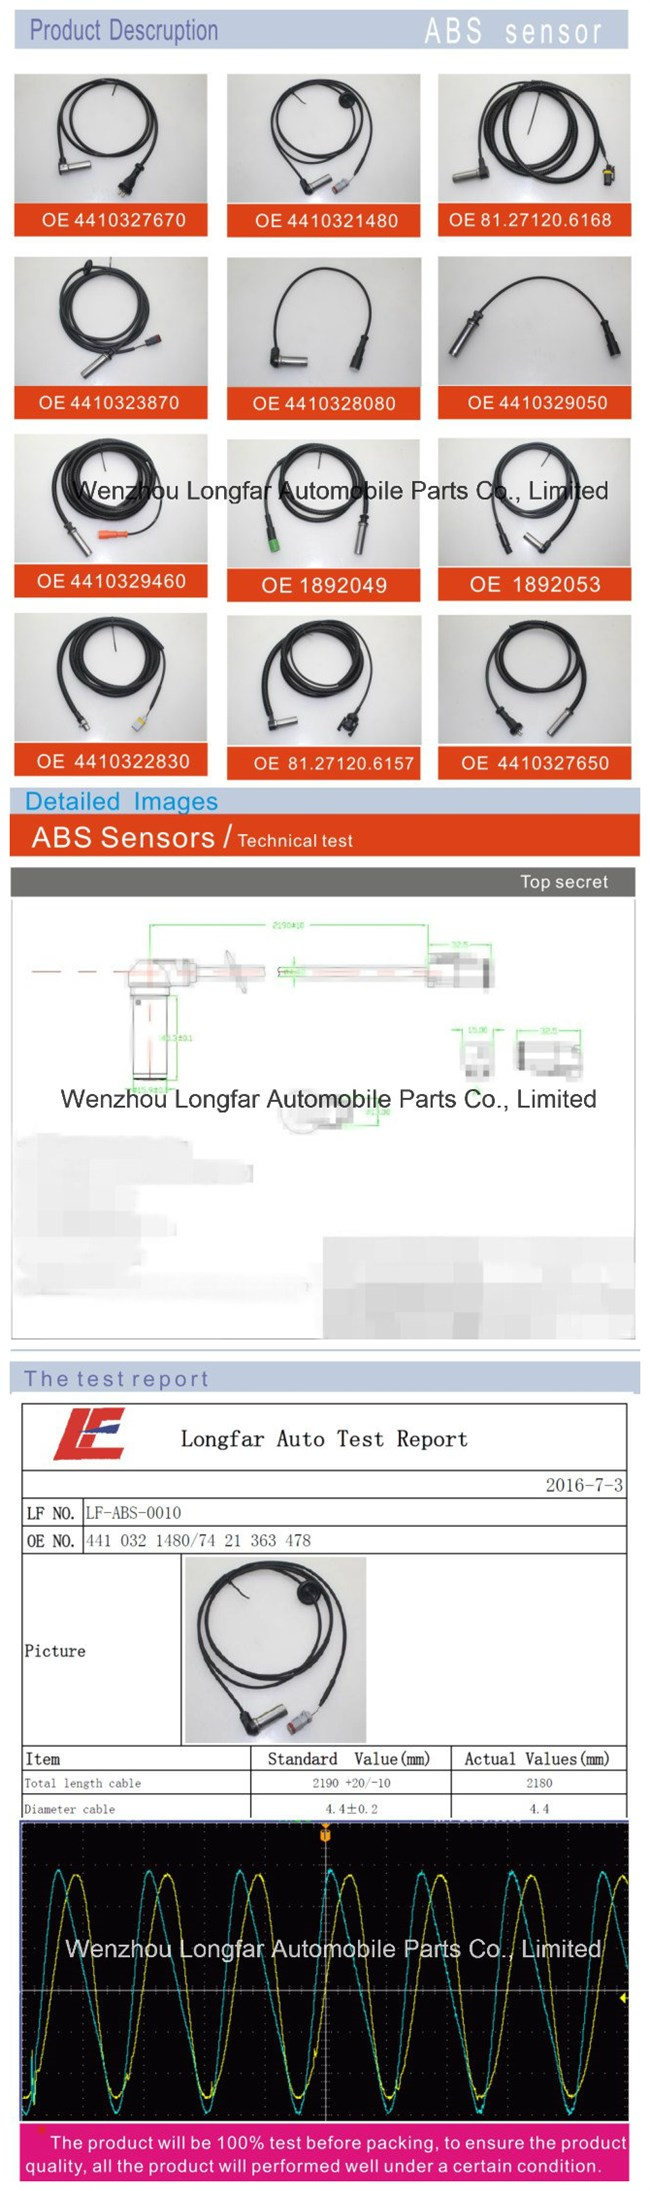 Auto ABS Sensor Anti-Lock Braking System Transducer Indicator Sensor 4410328780,441 032 172 0,5.20144,1778554,6000 138 848,096.361 for Mercedes-Benz,Dt,Sampa